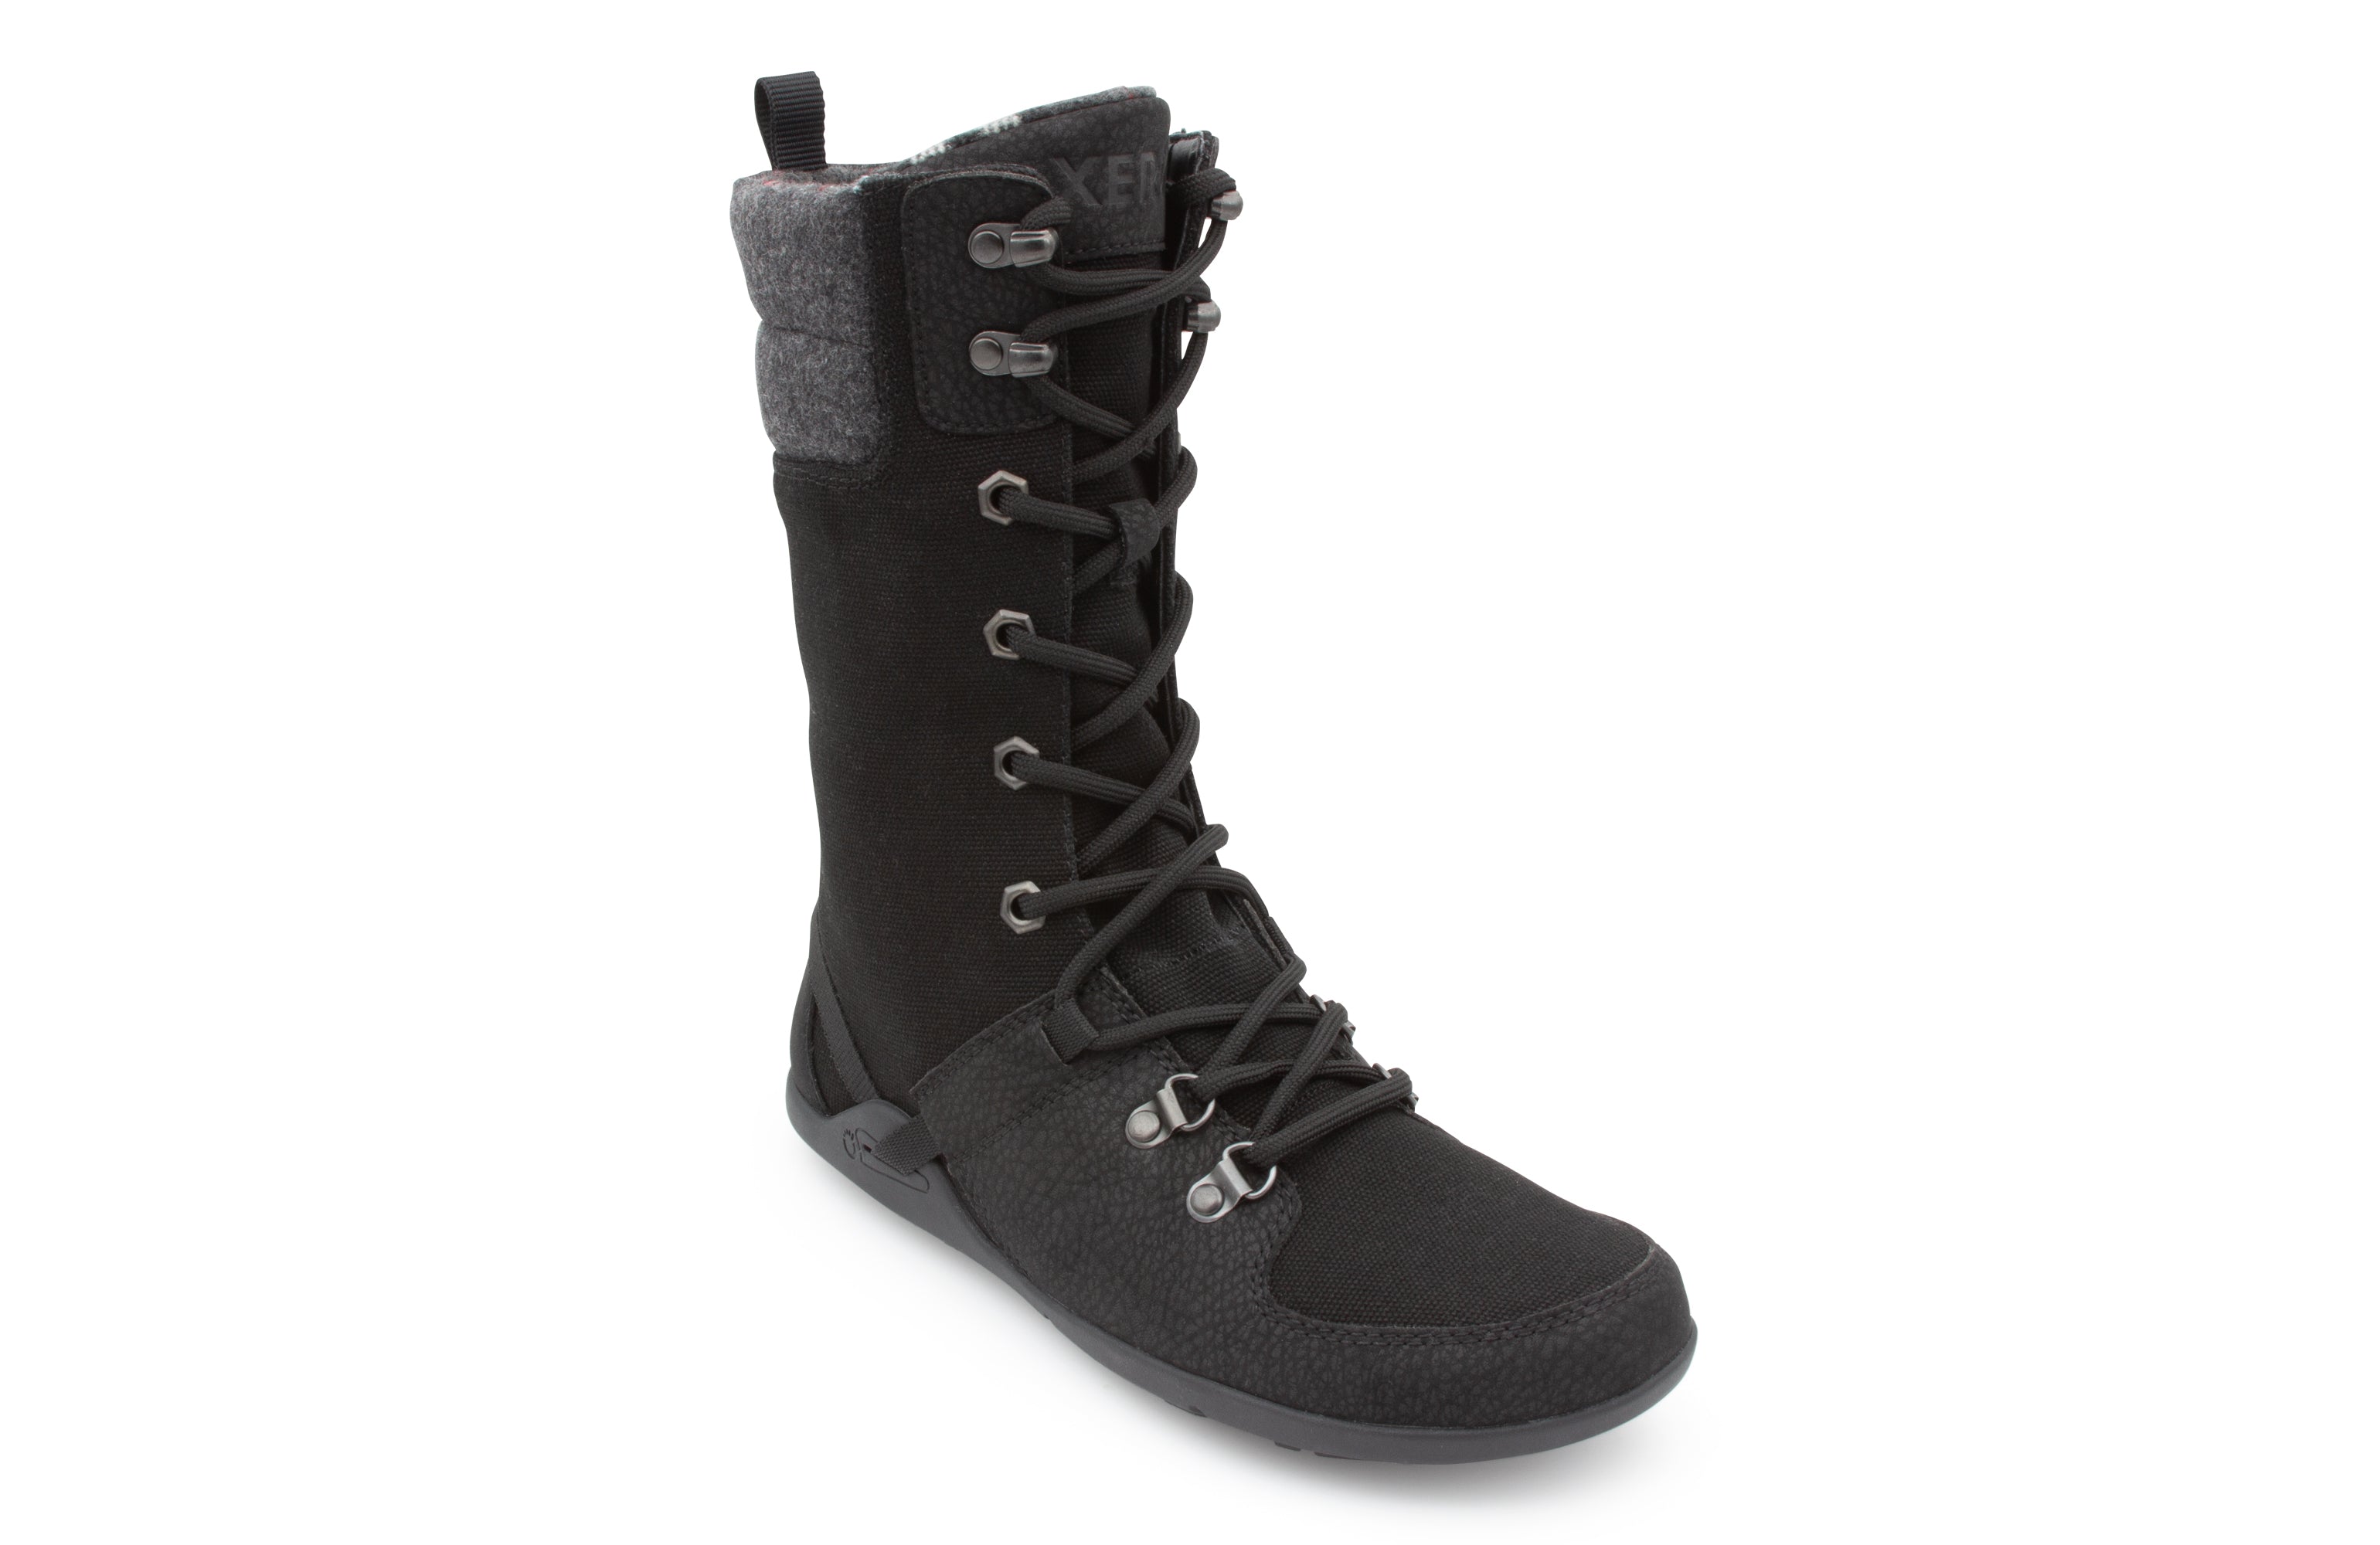 Xero Shoes Mika barfods vinterstøvler til kvinder i farven black, vinklet